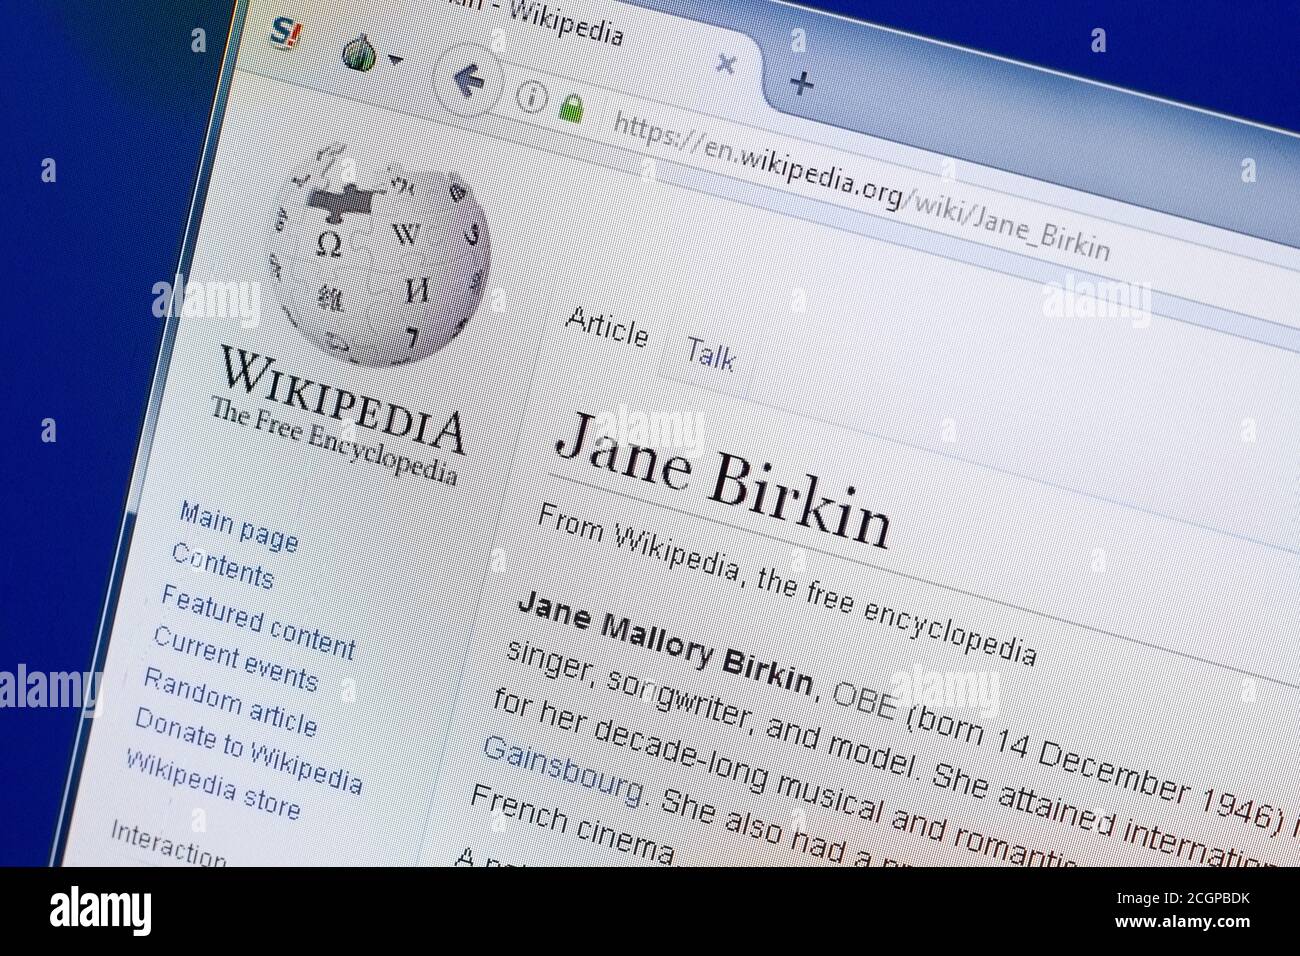 Jane Birkin - Wikipedia